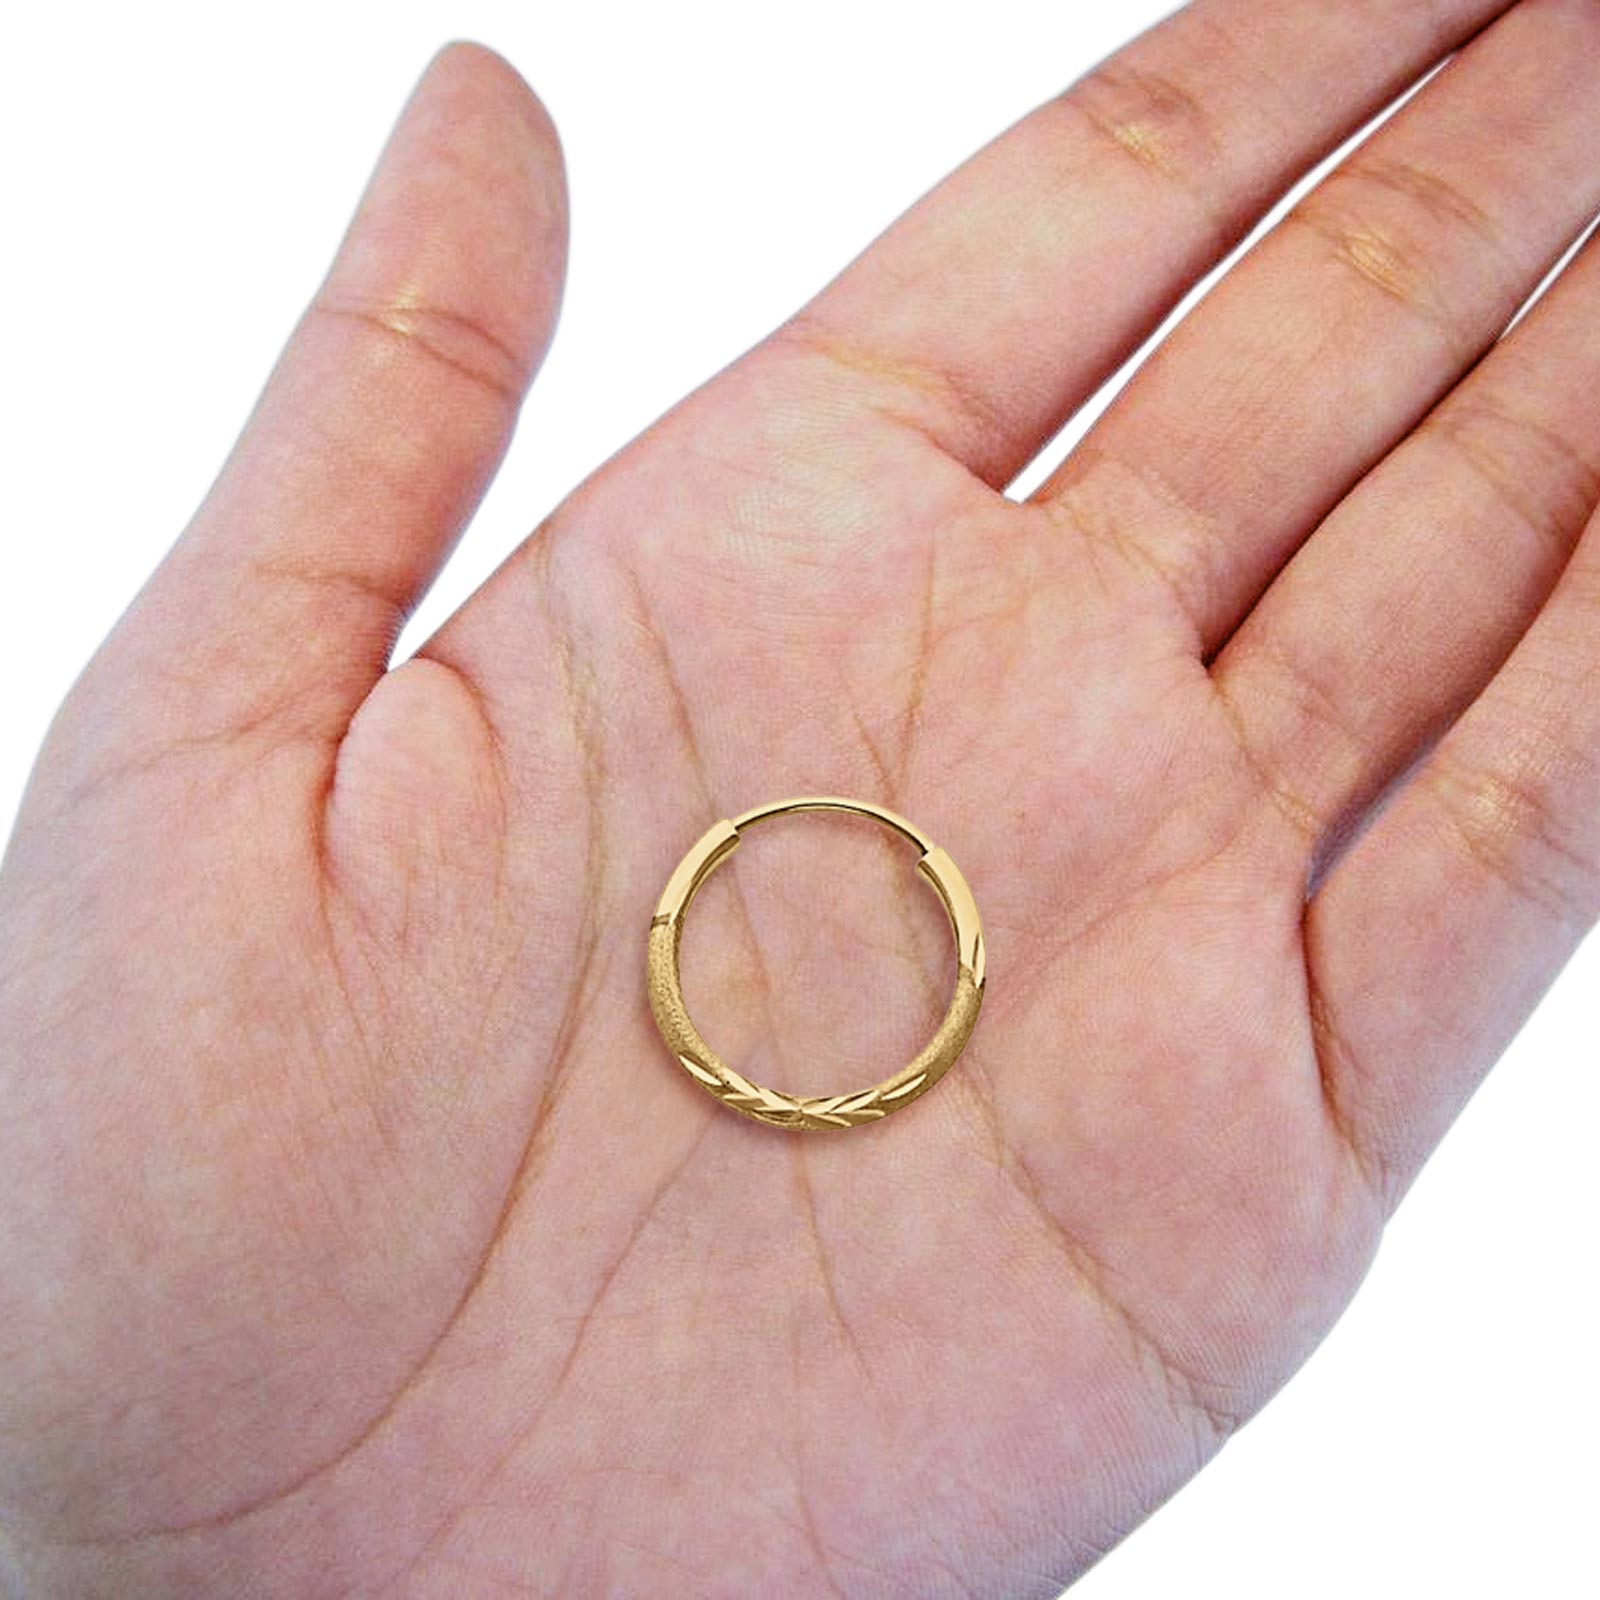 1 Gram Gold Plated With Diamond Fancy Design High-quality Ring For Men -  Style B343 at Rs 1240.00 | सोने का पानी चढ़ी हुई अंगूठी - Soni Fashion,  Rajkot | ID: 2851291134491